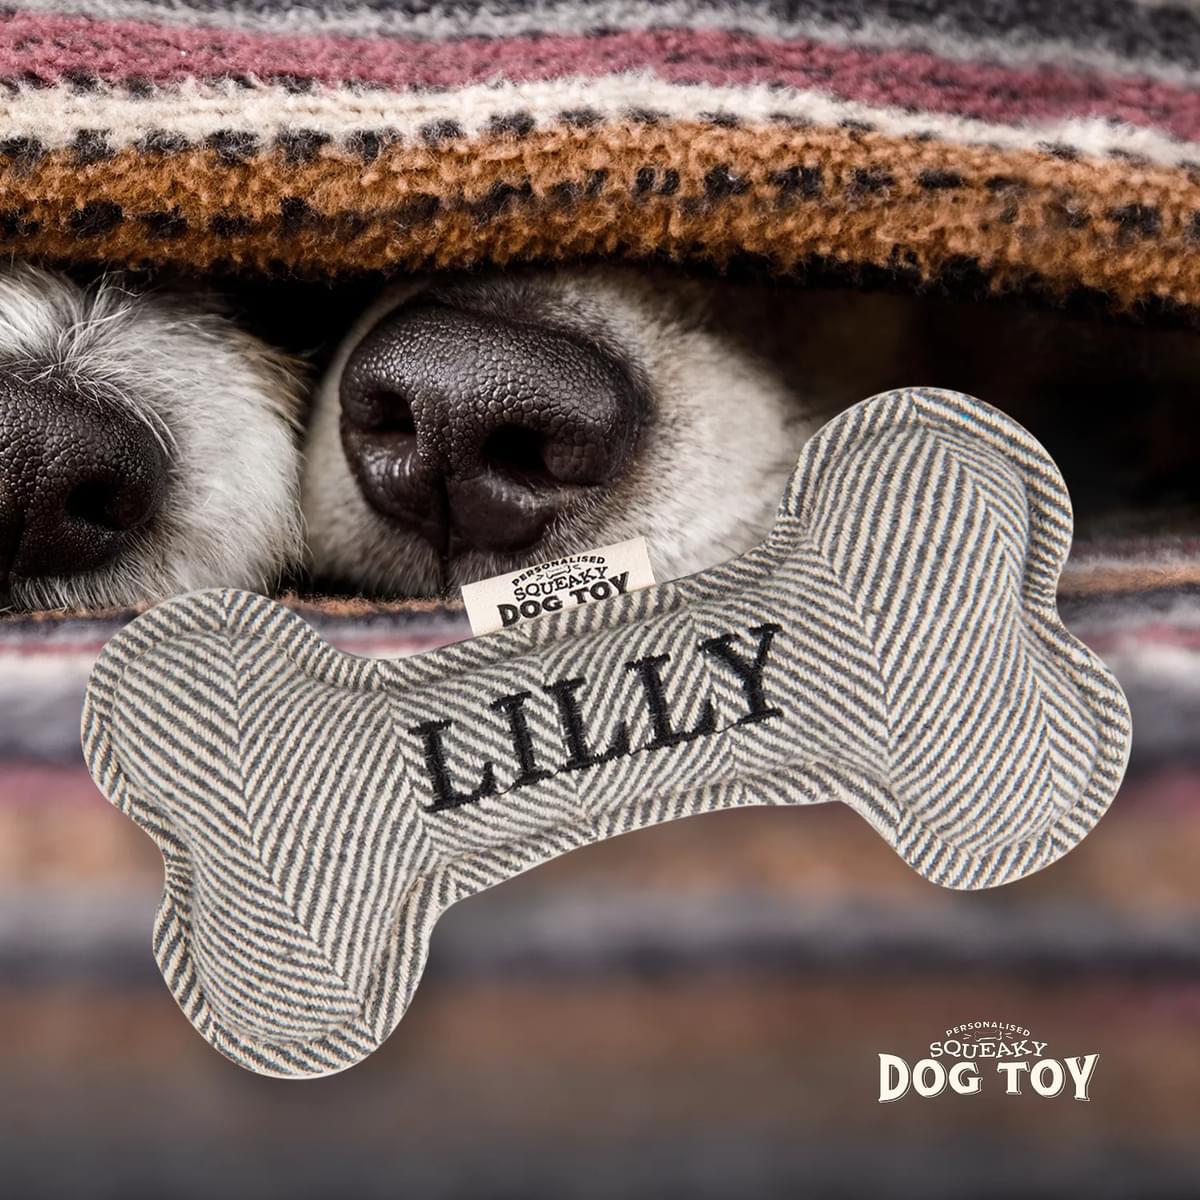 Named Squeaky Dog Toy- Lilly. Bone shaped herringbone tweed pattern dog toy. 